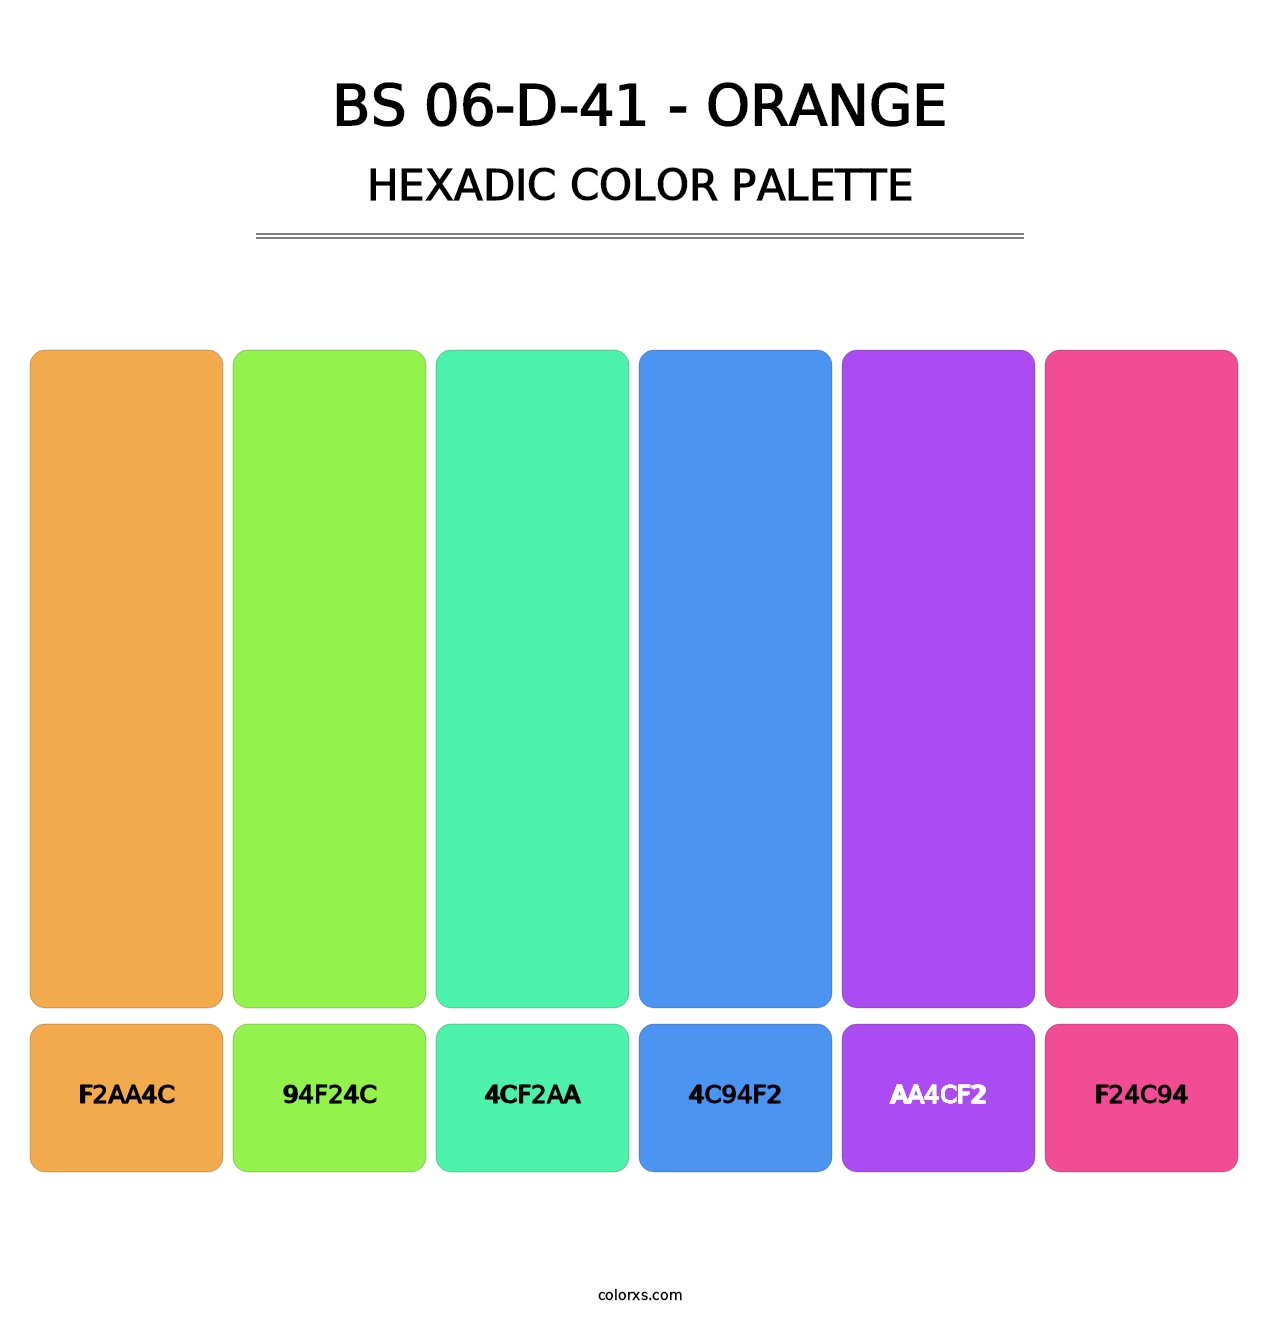 BS 06-D-41 - Orange - Hexadic Color Palette